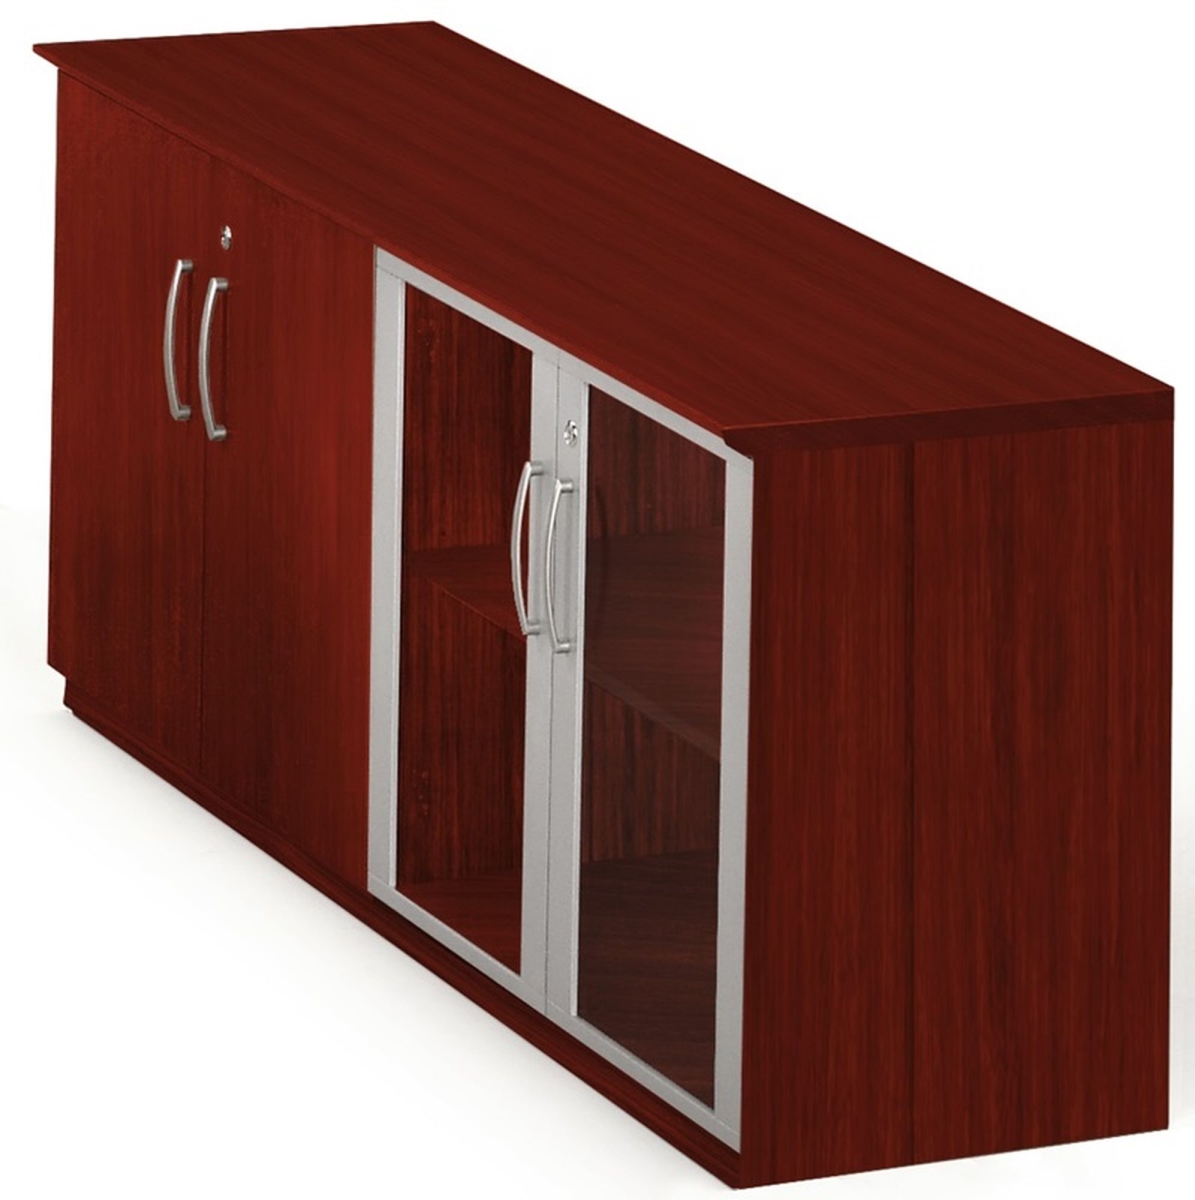 Mvlclmh Medina Low Wall Cabinet With Glass Doors - Mahogany - 29.5 X 72 X 20 In.